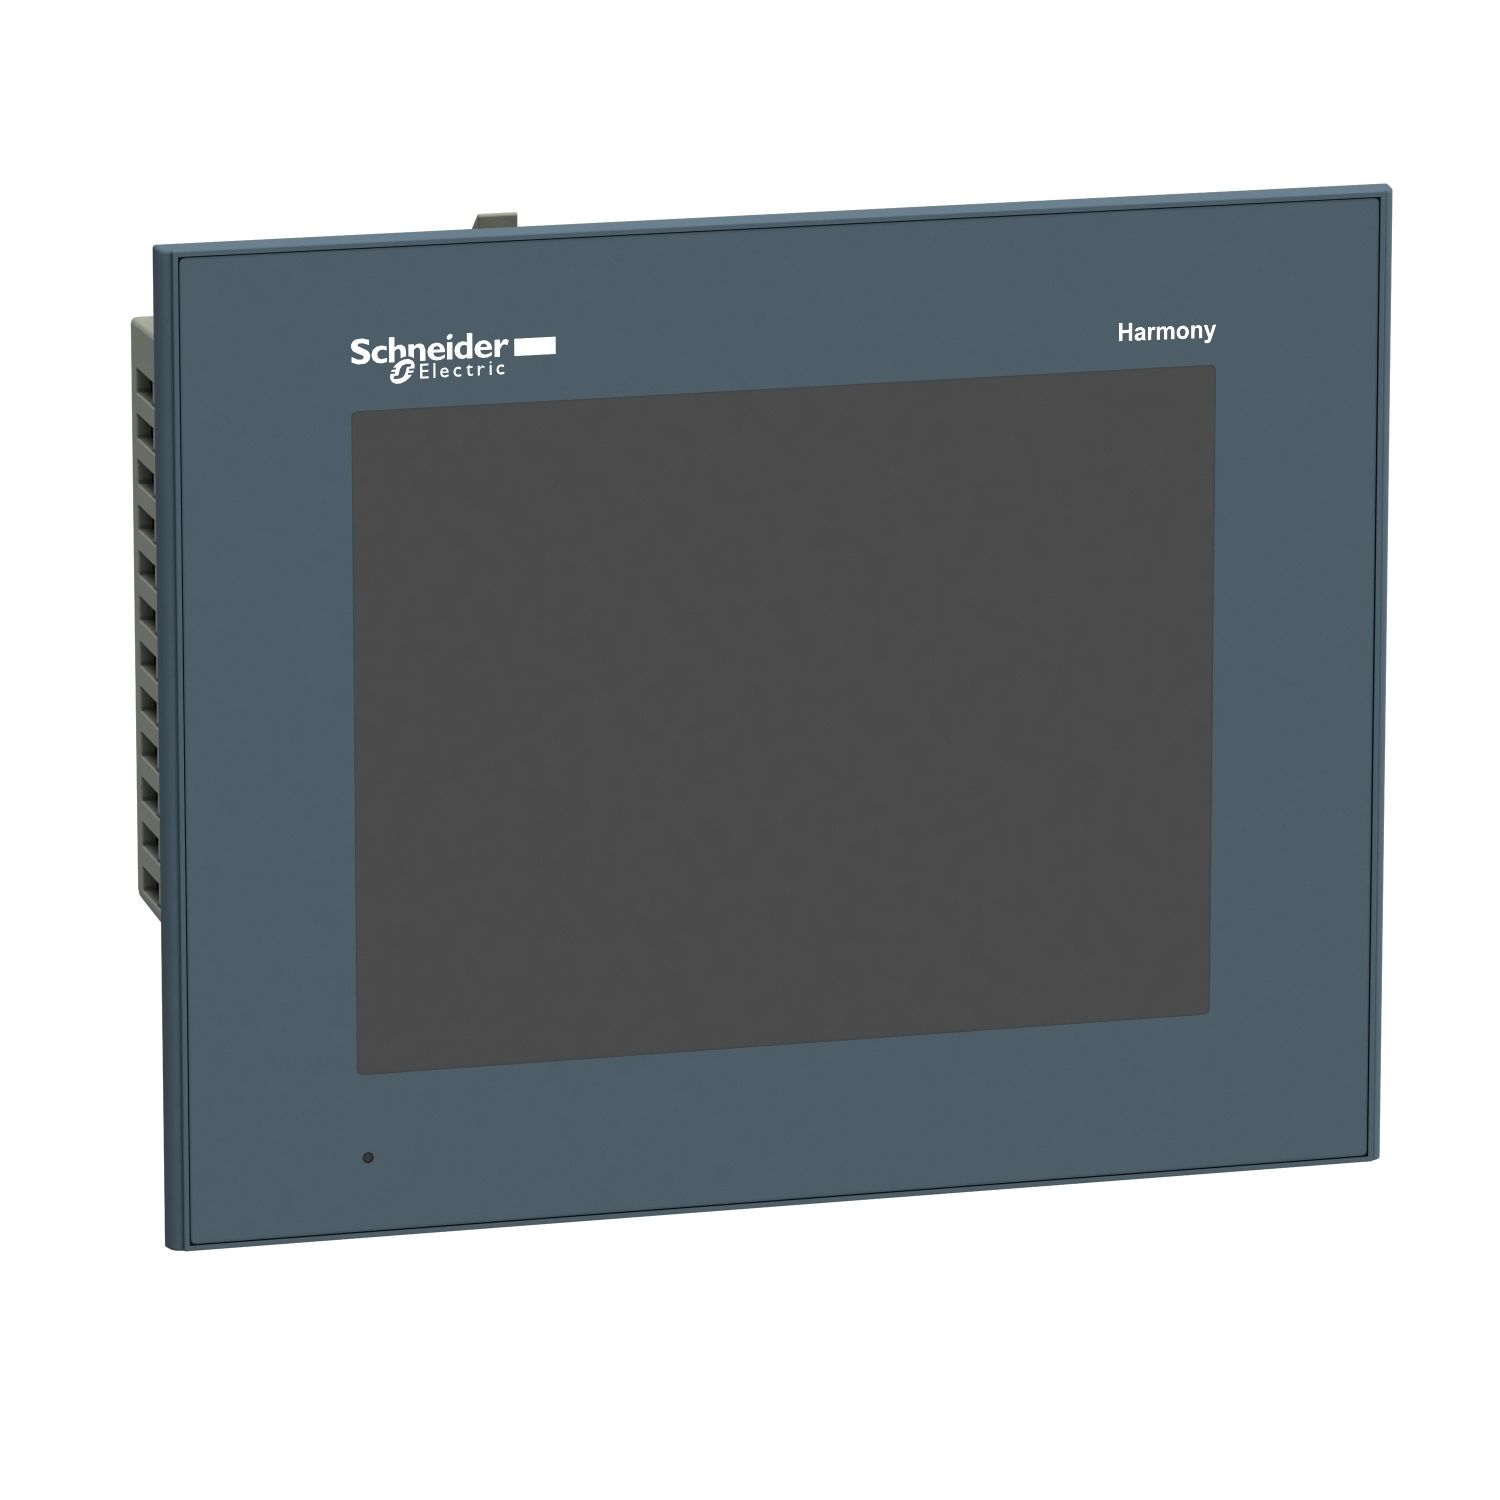 HMIGTO4310 Advanced touchscreen panel, Harmony GTO, 640 x 480 pixels VGA, 7.5'', TFT, 96 MB